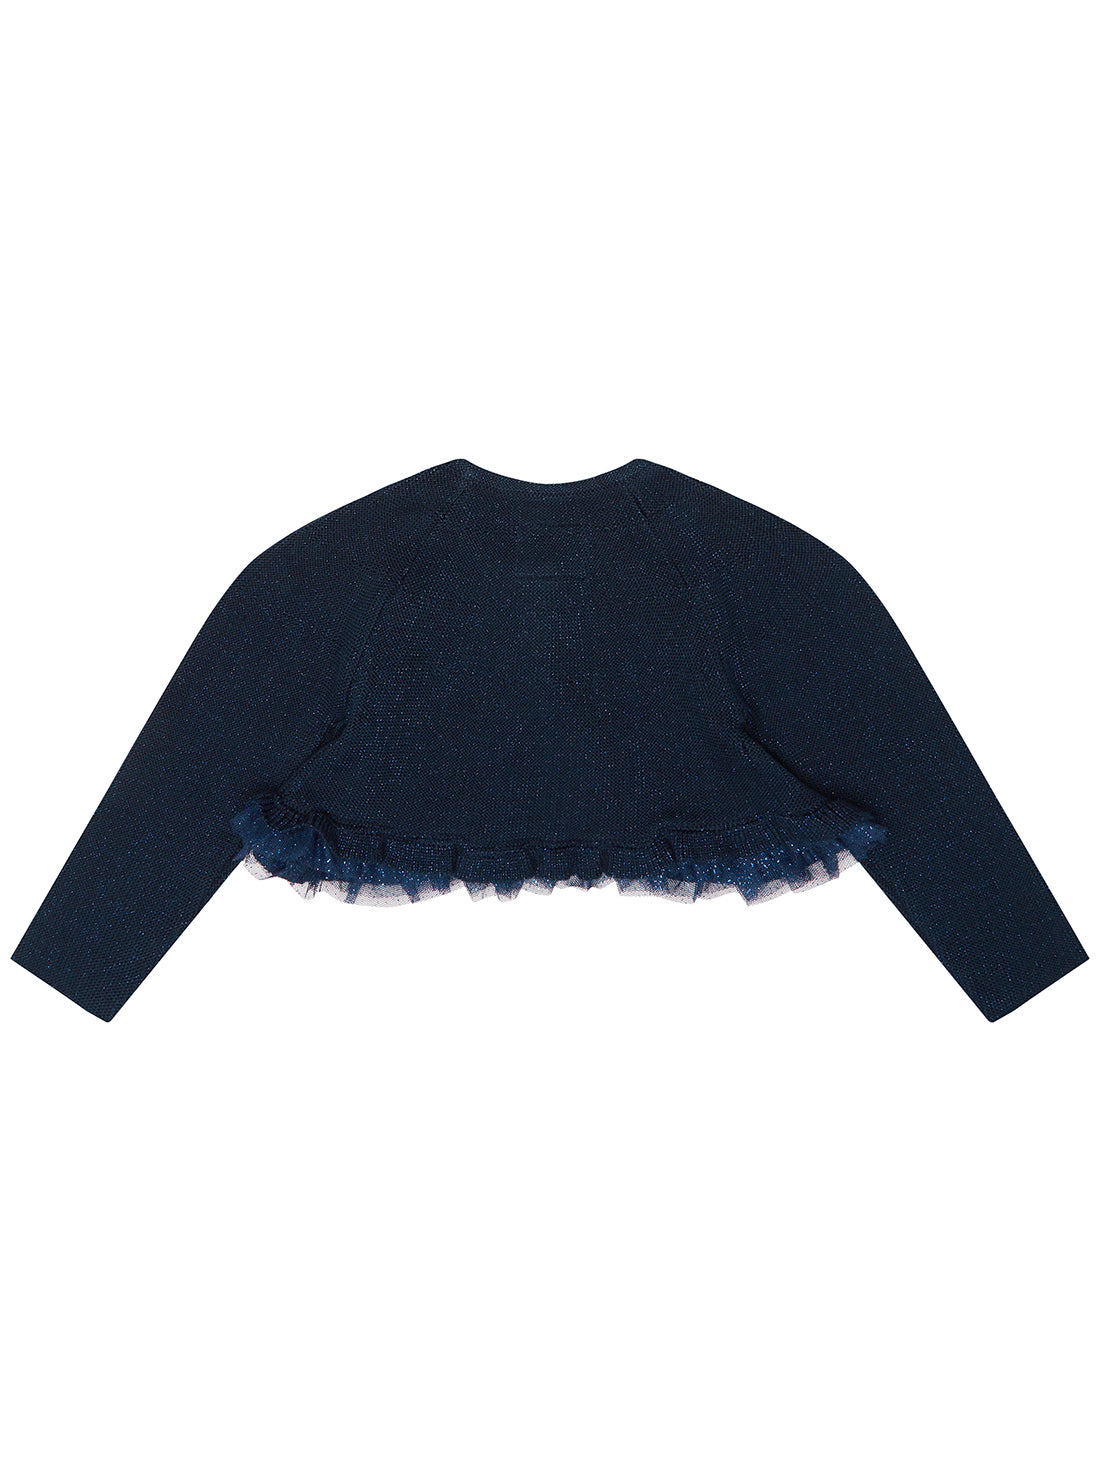 Secret Blue Knit Cardigan (0-12m)